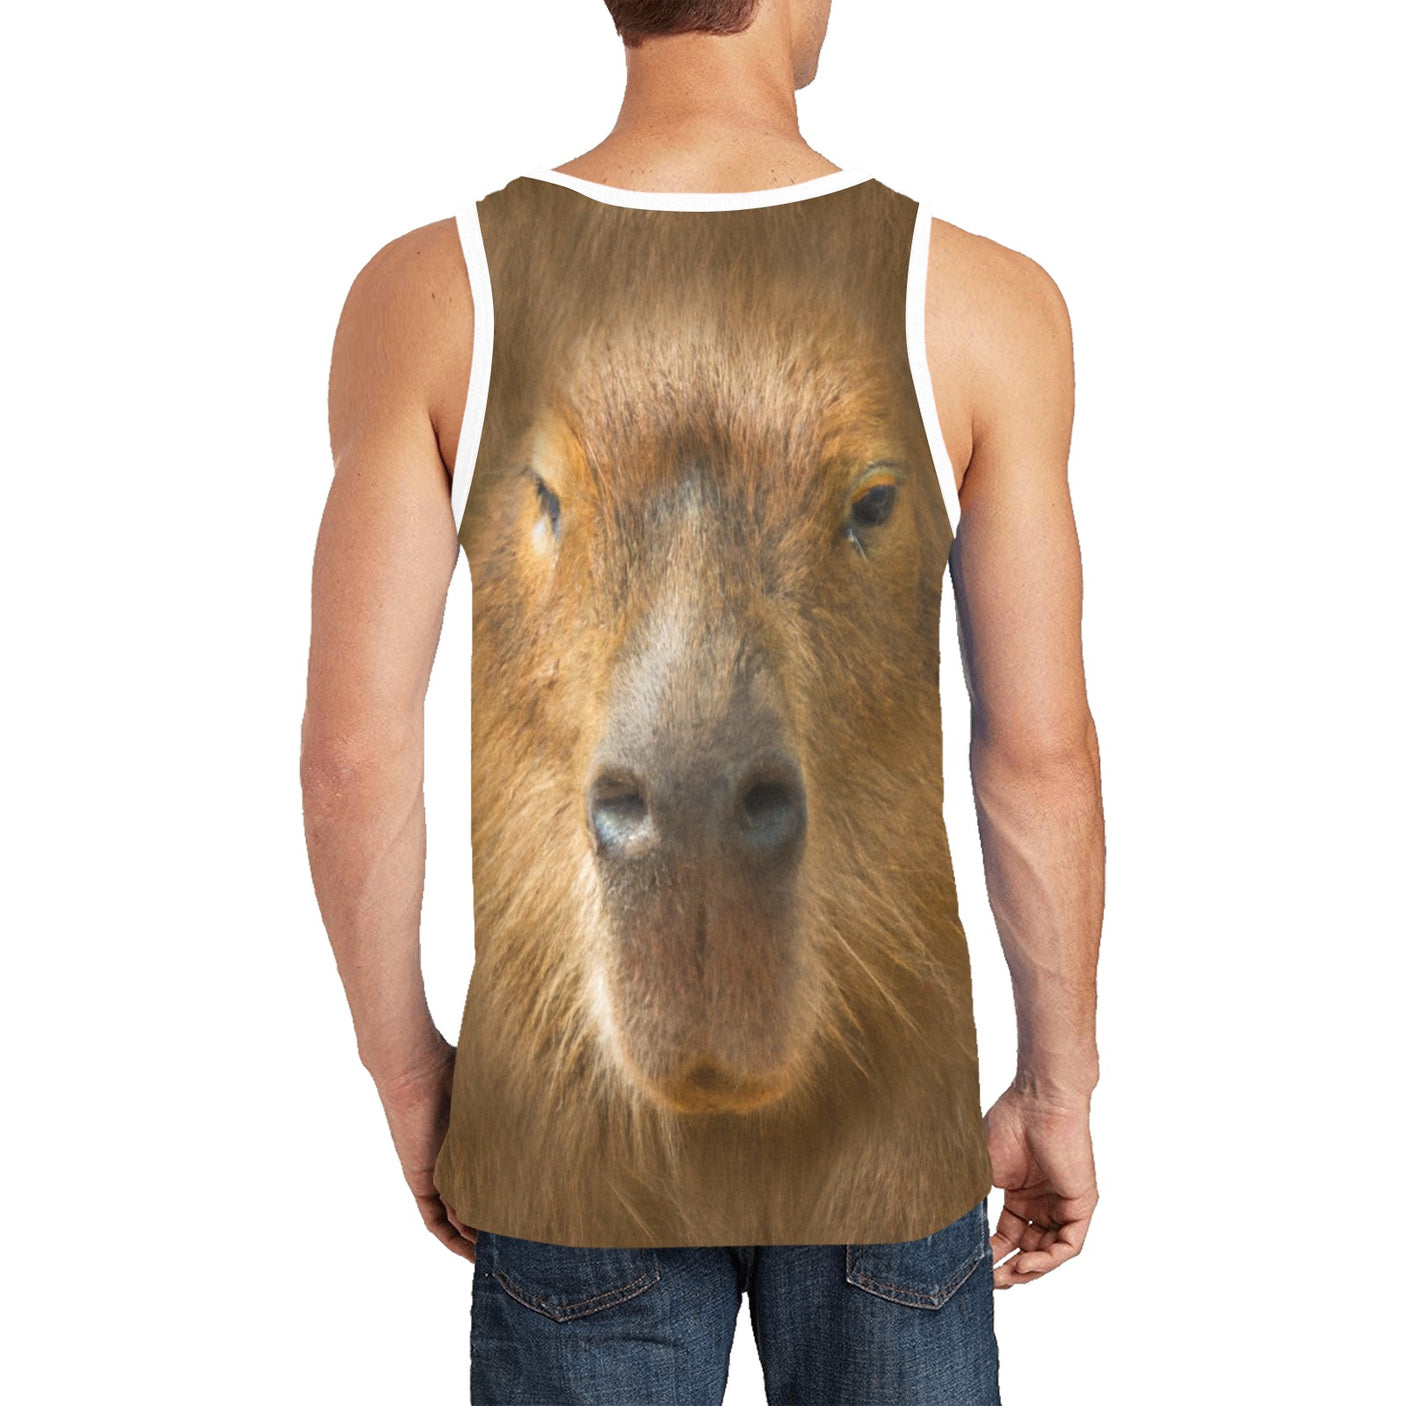 Capybara-Gesicht Tank Top